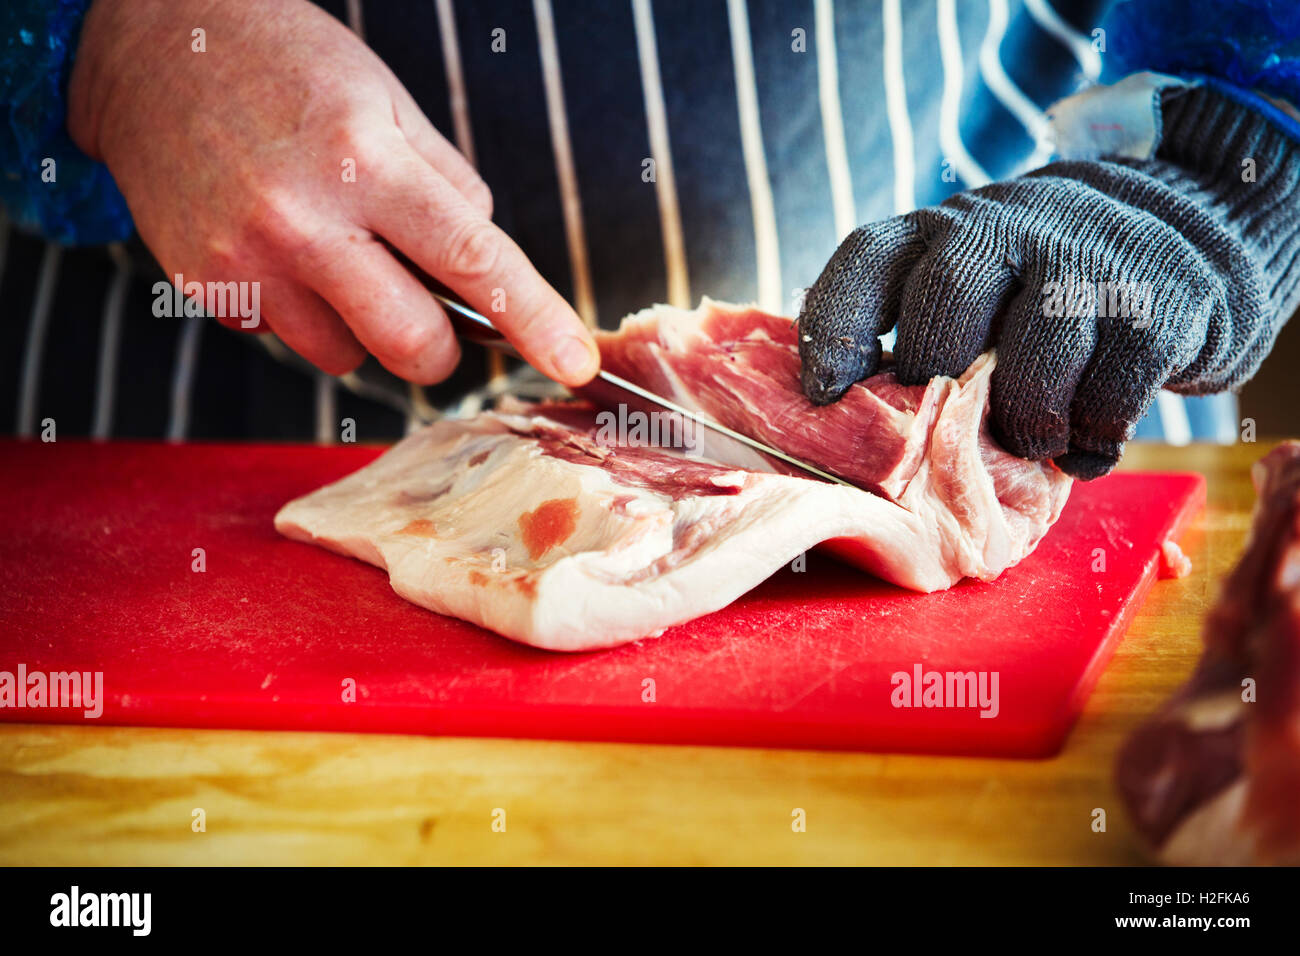 https://c8.alamy.com/comp/H2FKA6/butcher-wearing-a-striped-blue-apron-and-protective-glove-cutting-H2FKA6.jpg